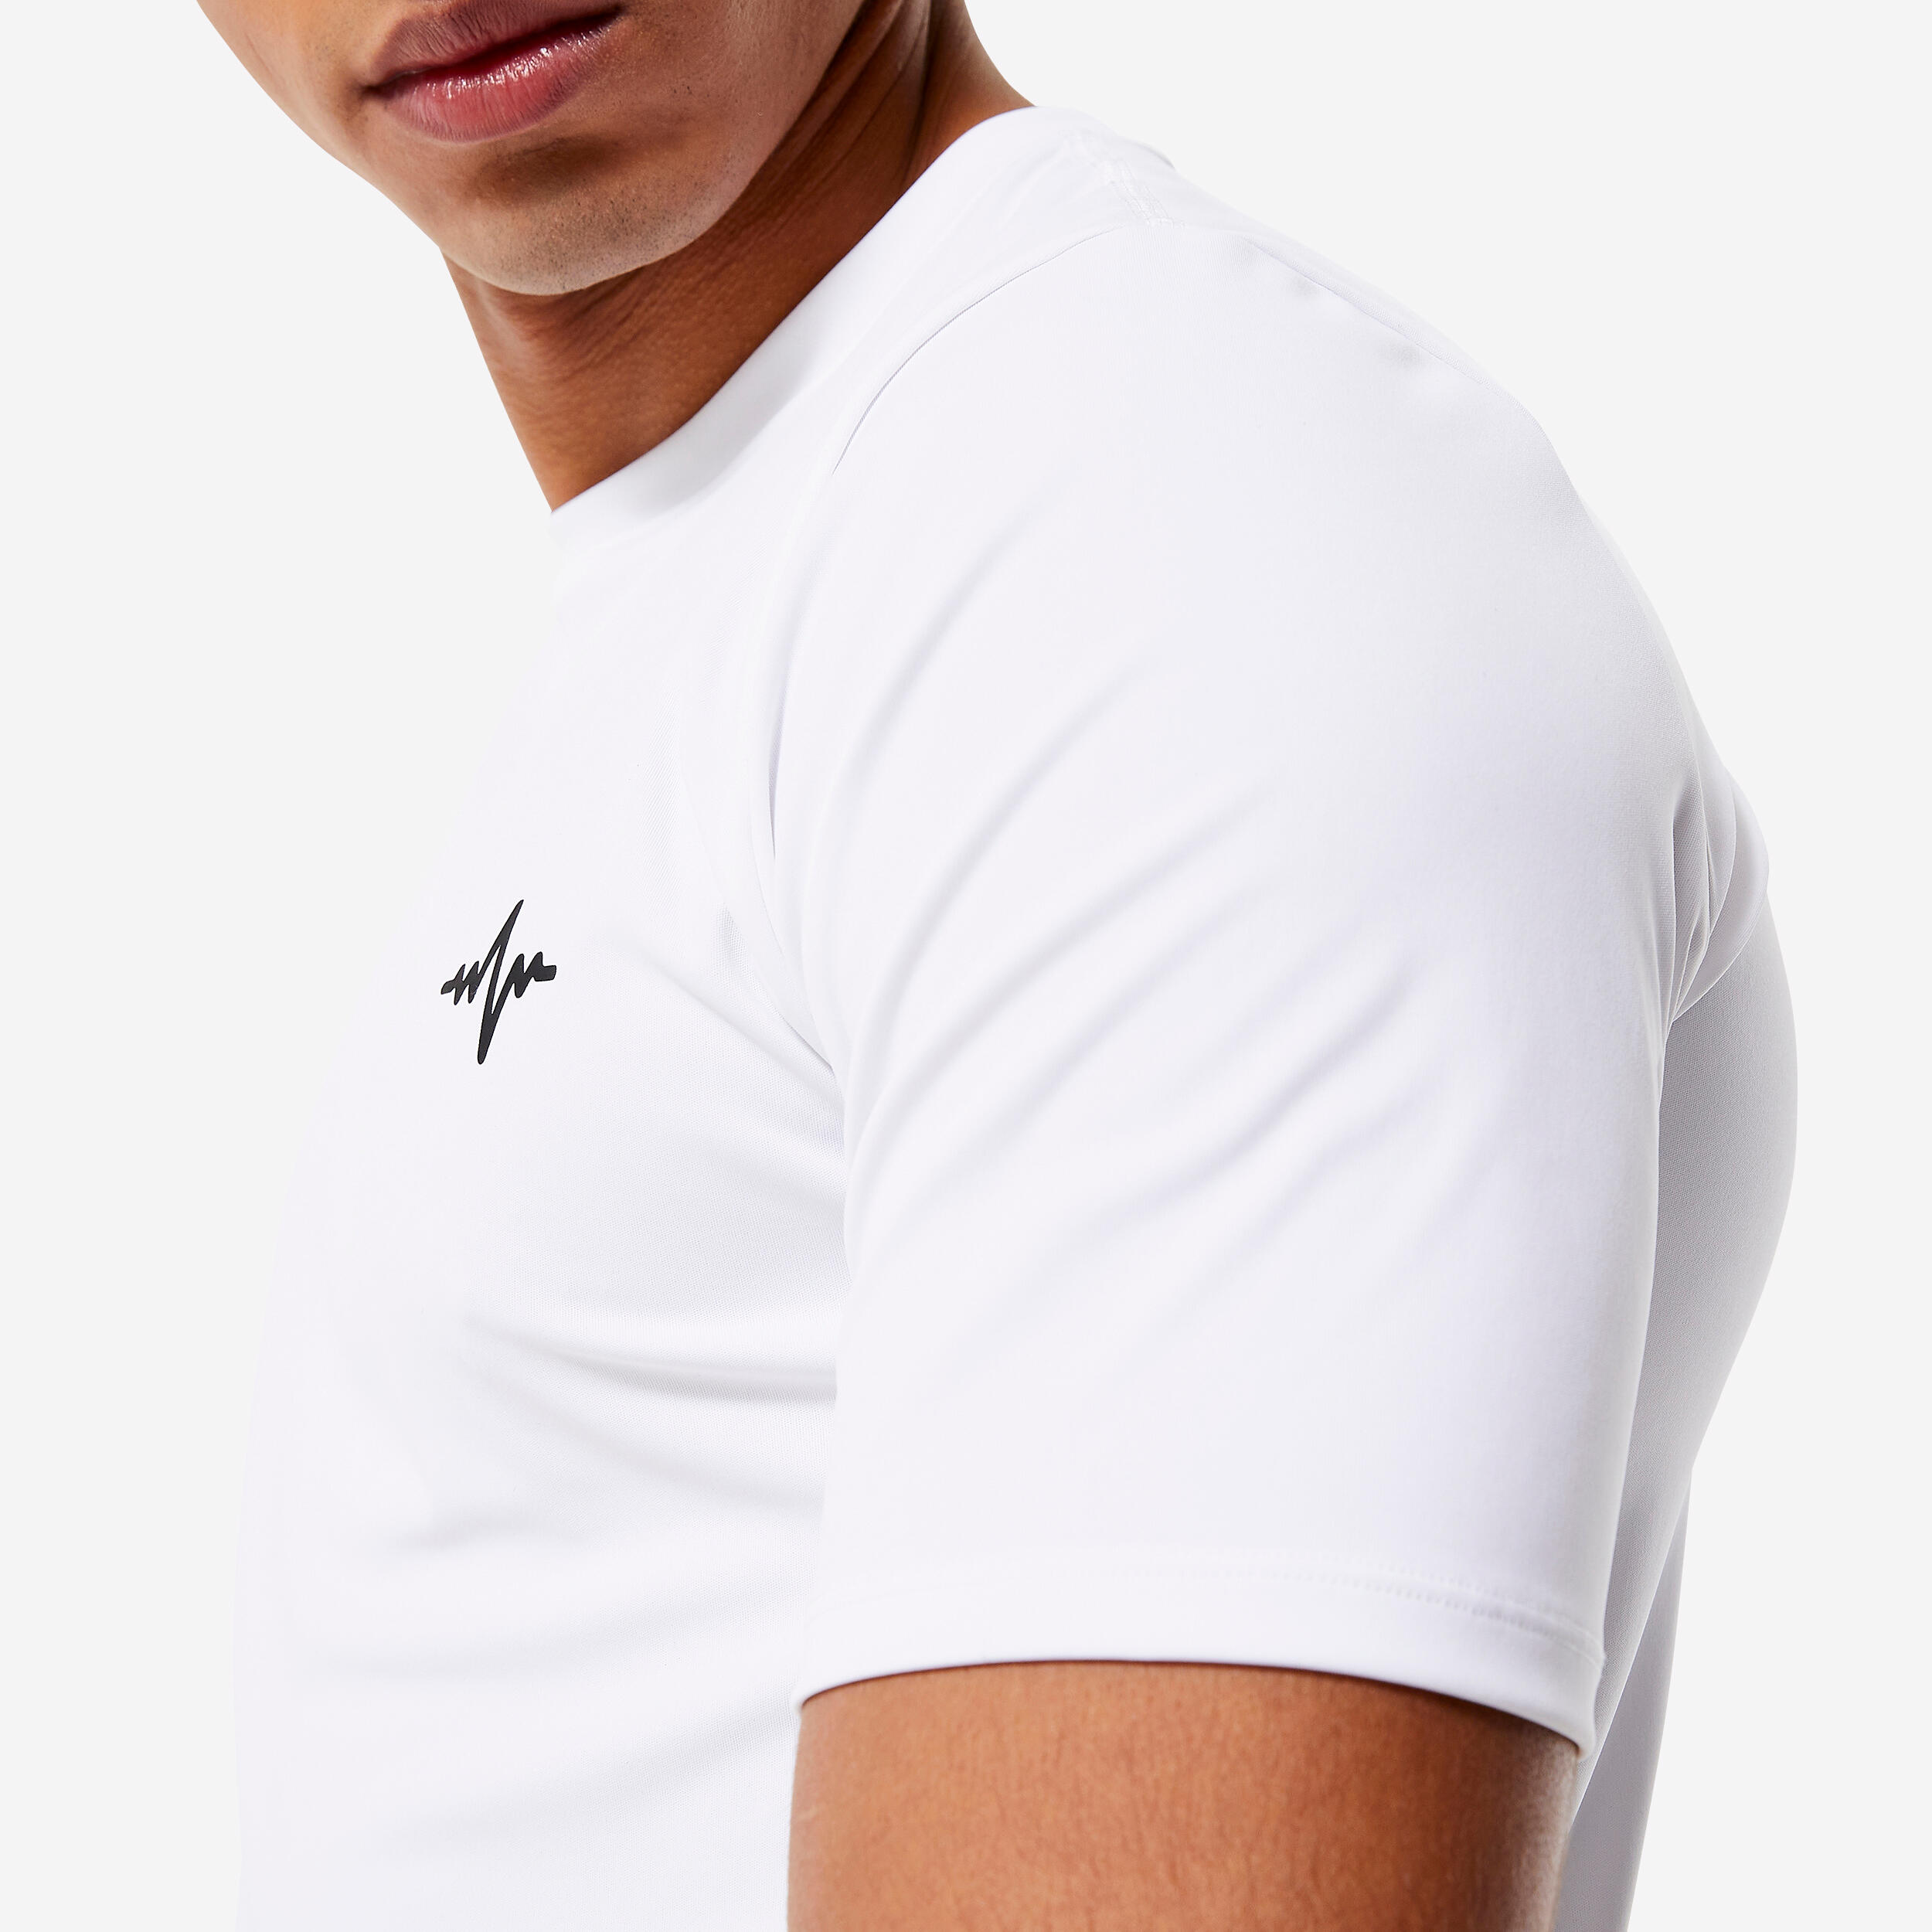 Men's Fitness Breathable Essential Short-Sleeved Crew Neck T-Shirt - White 4/6